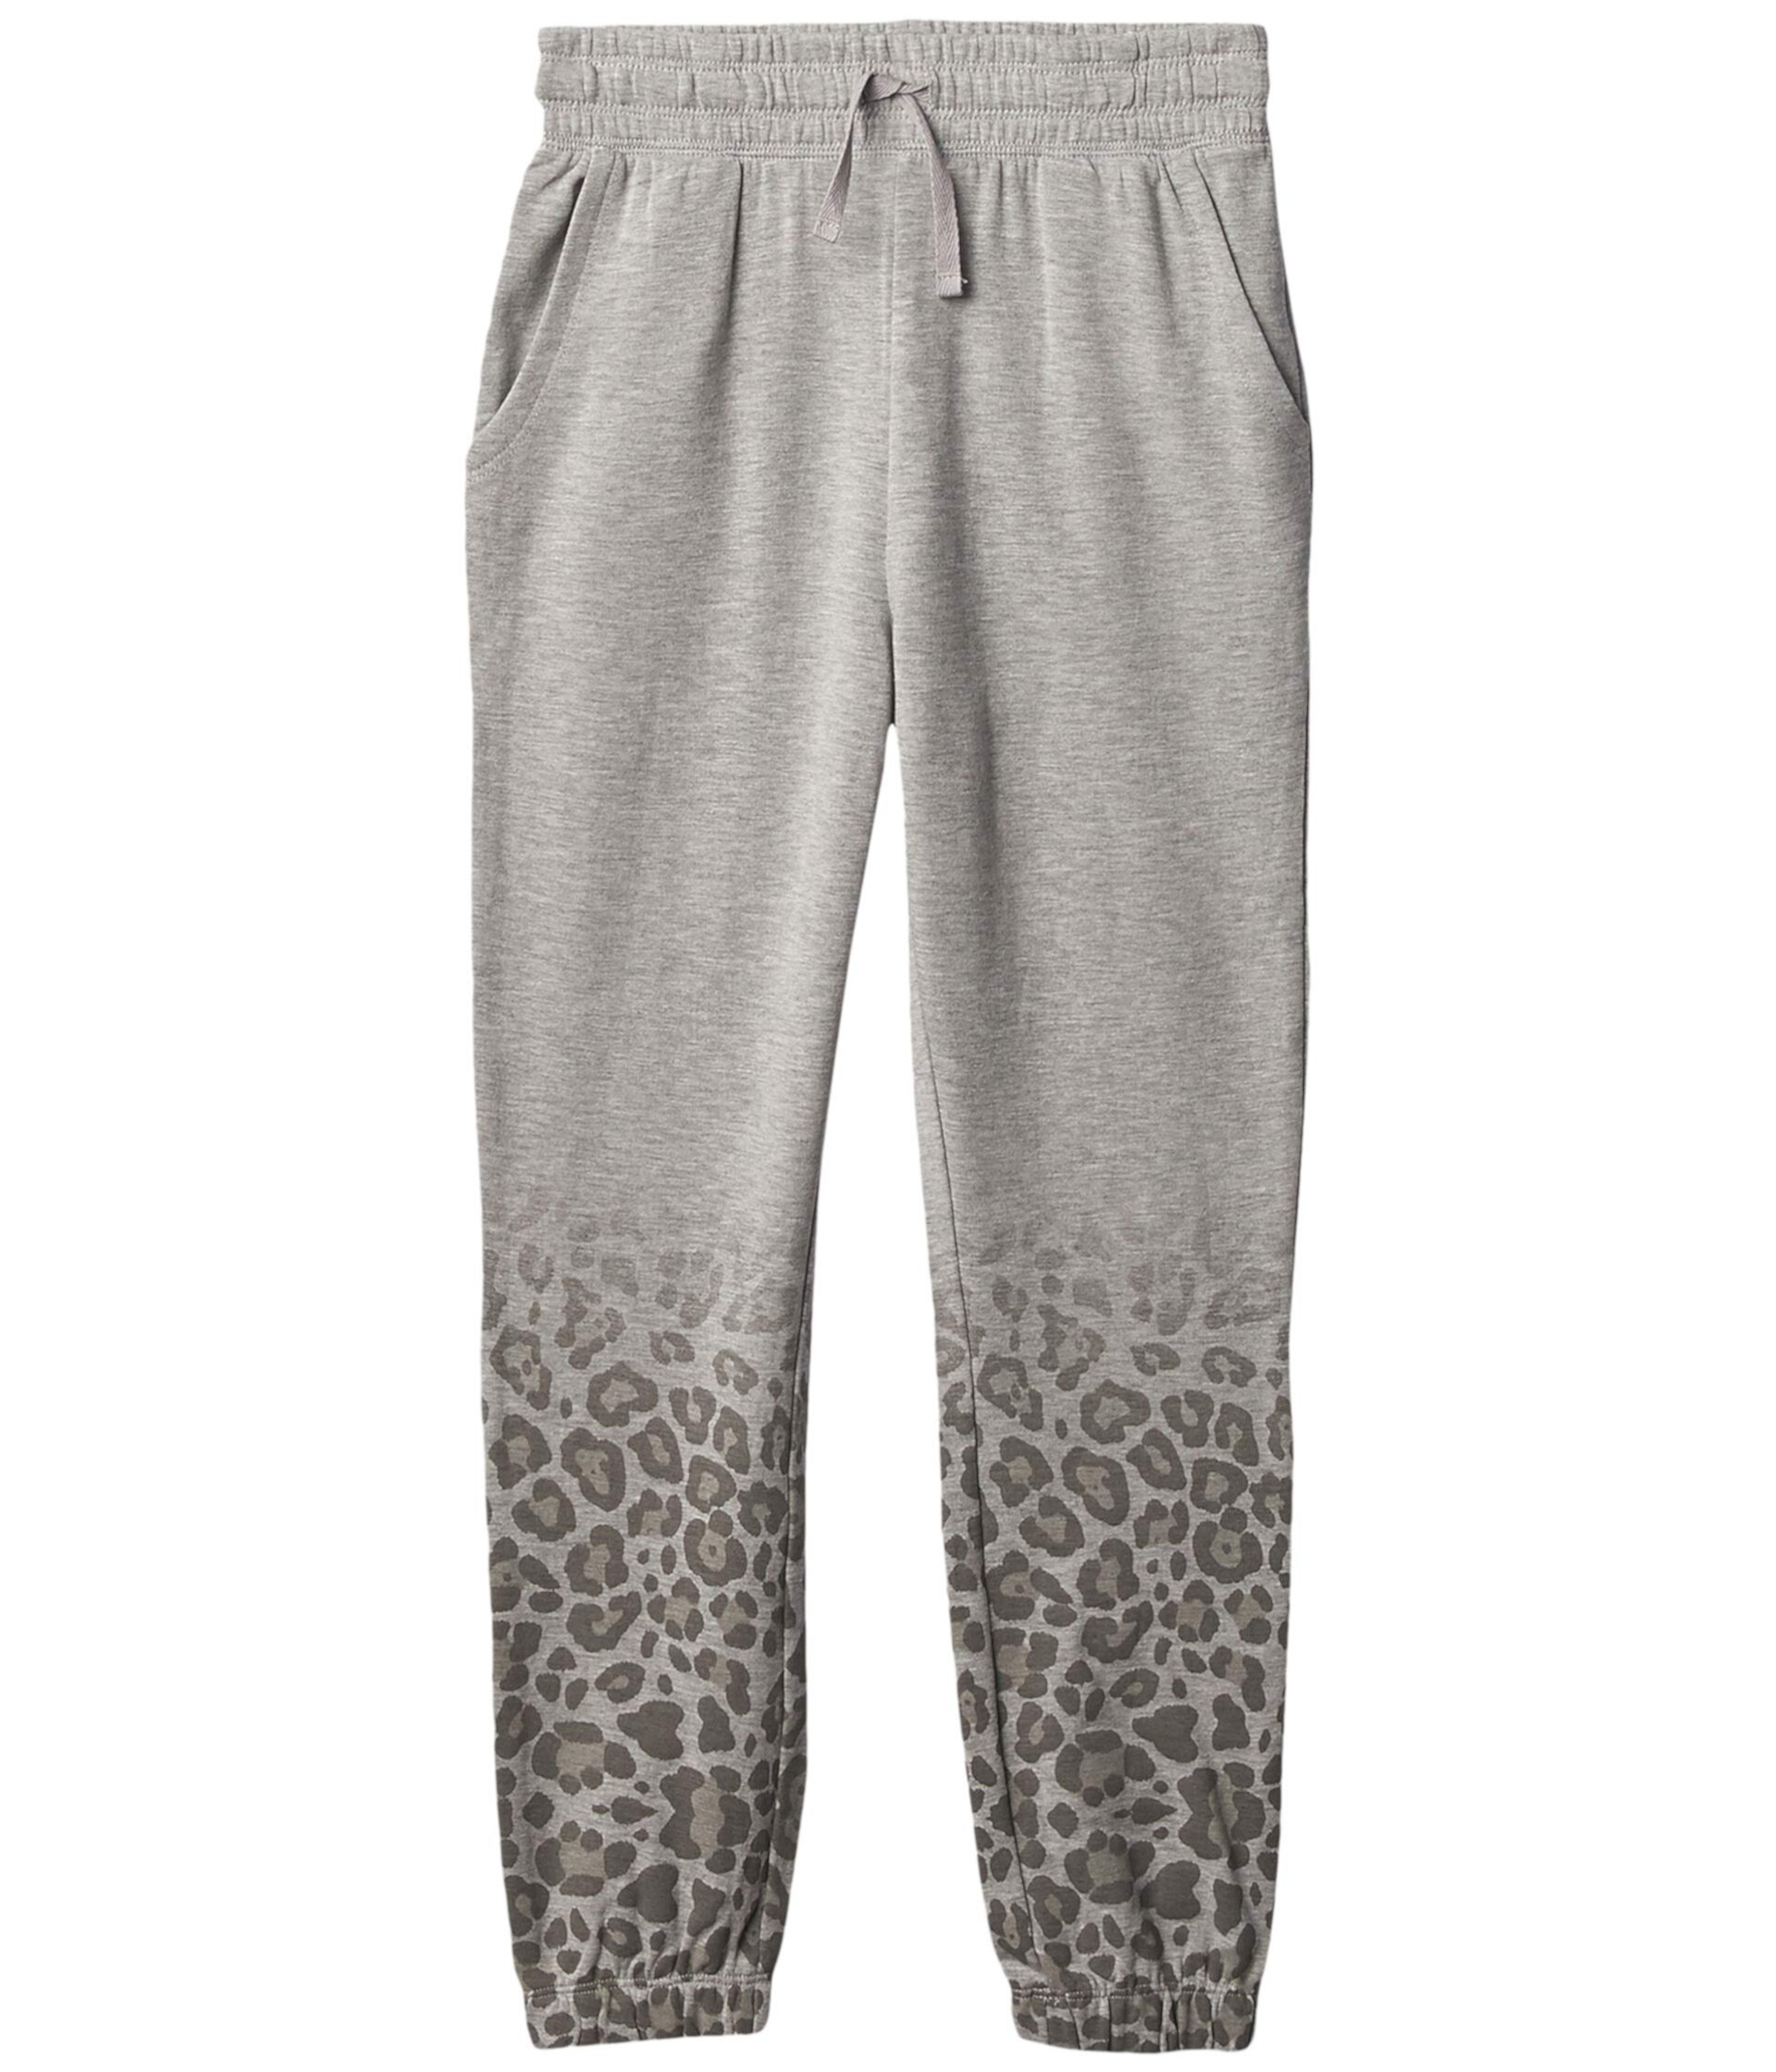 Ombre Leopard Sweatpants (Big Kids) Splendid Littles